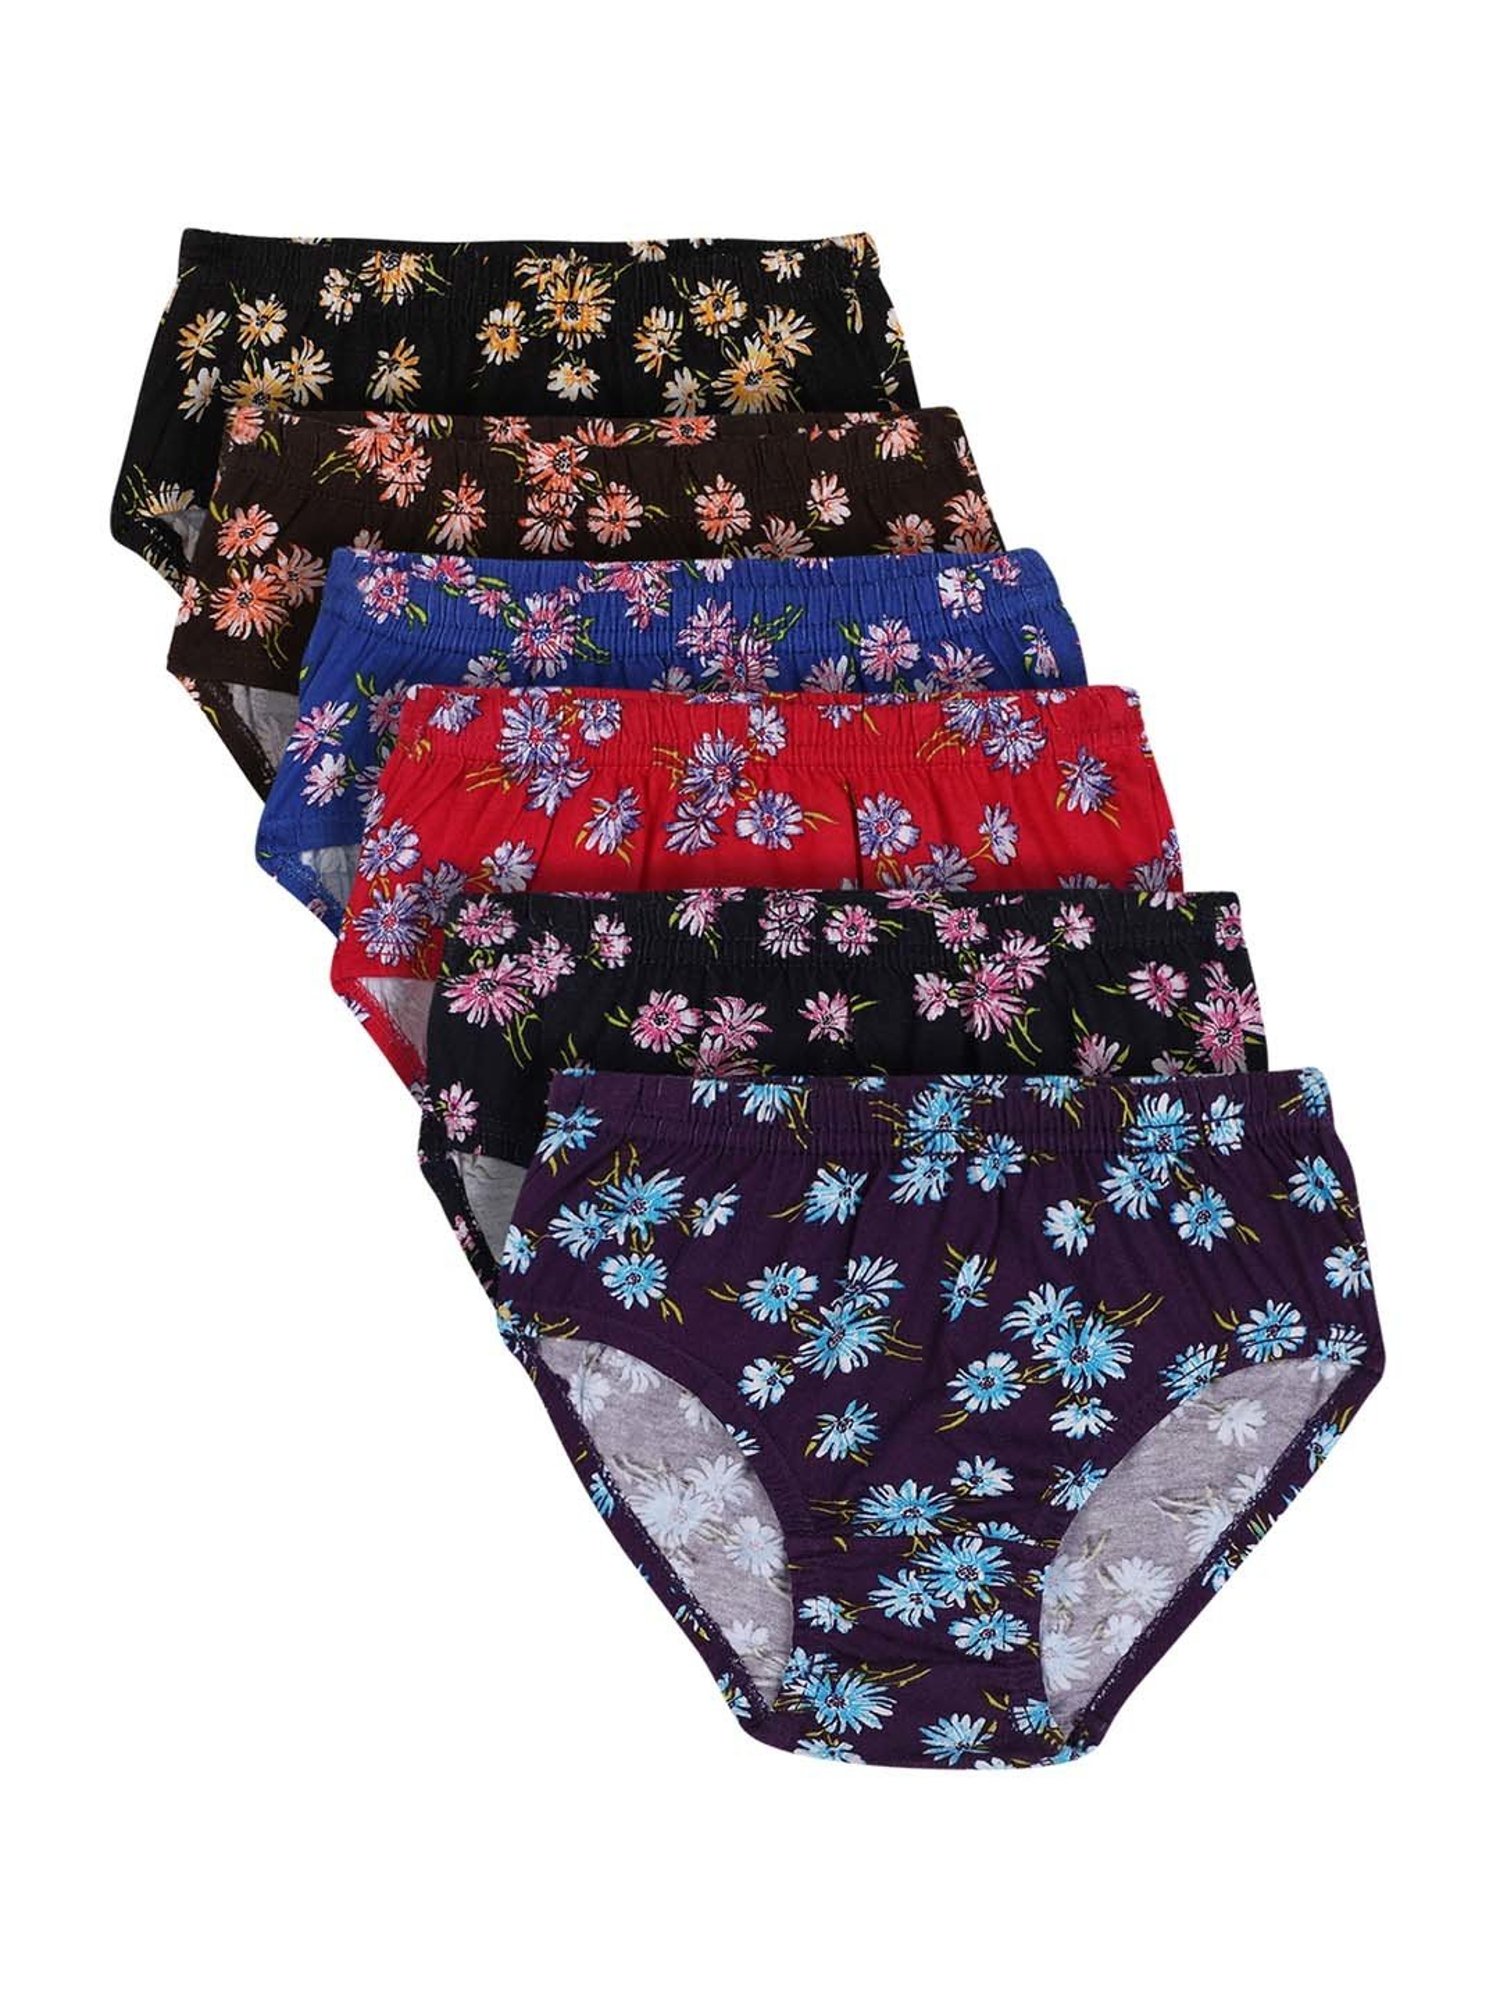 Buy Bodycare Kids Multi Cotton Printed Panties for Girls Clothing